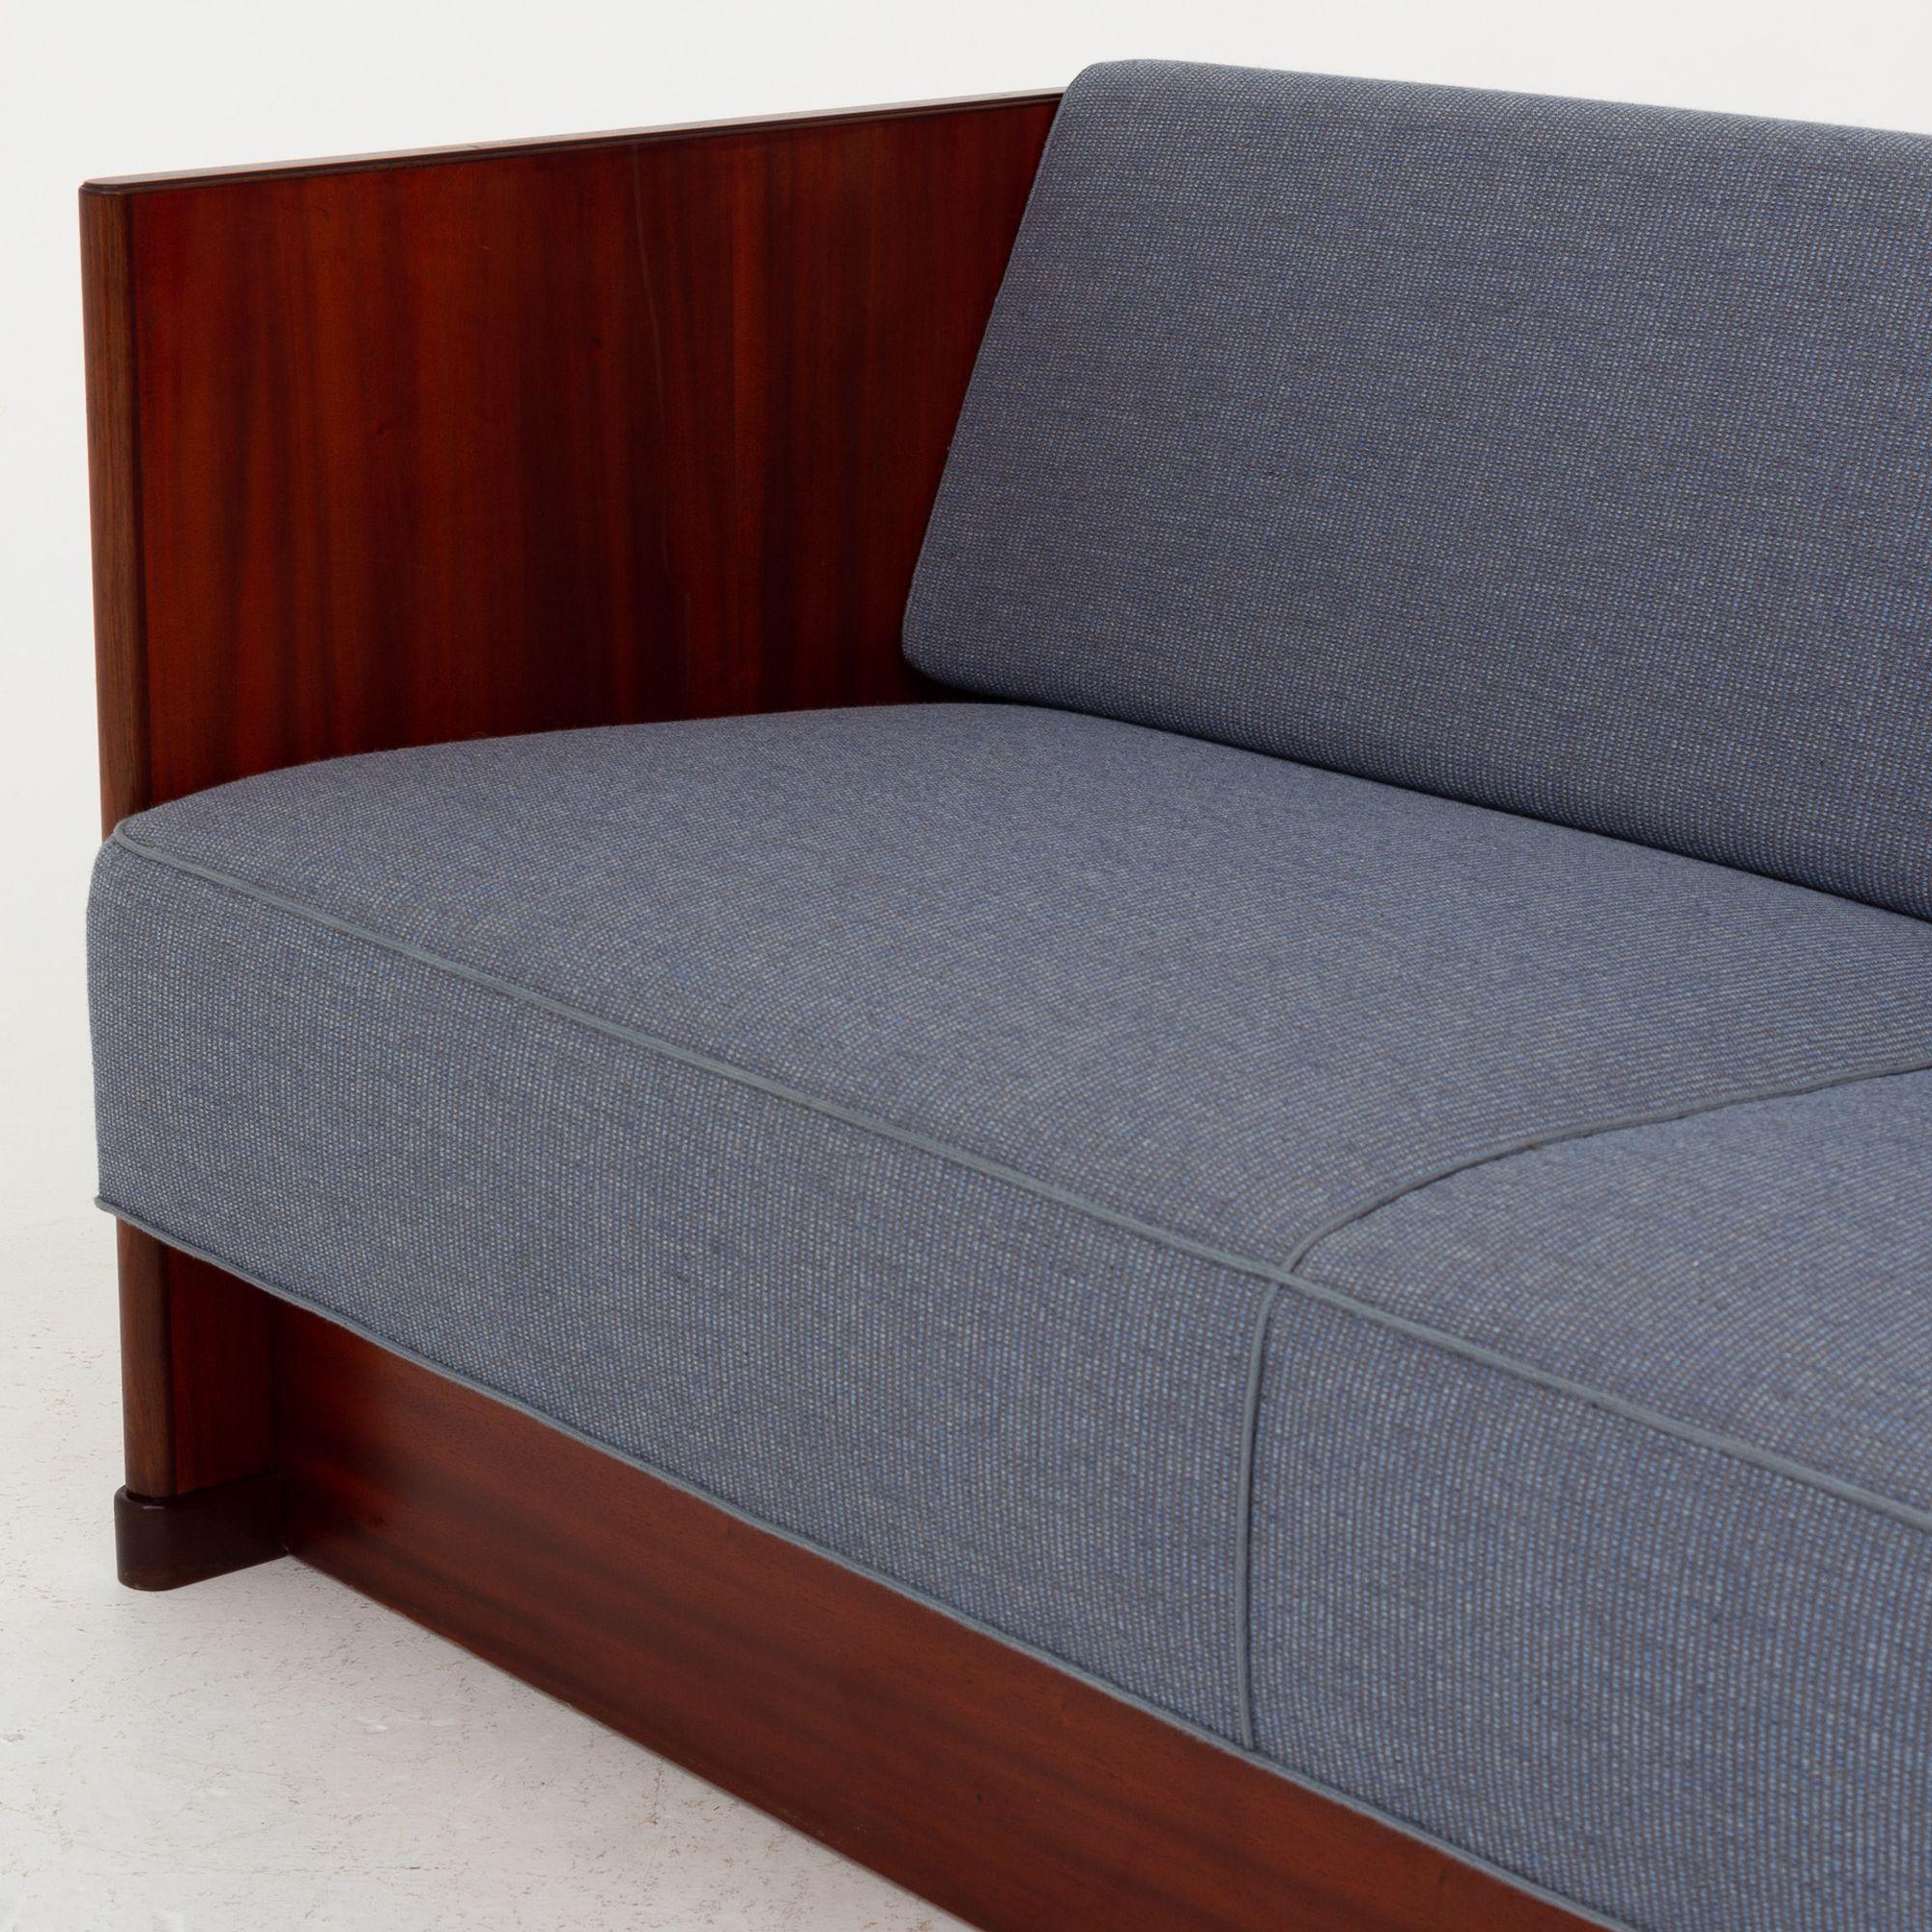 Sofa bed in mahogany w. blue cushions. Frits Henningsen.